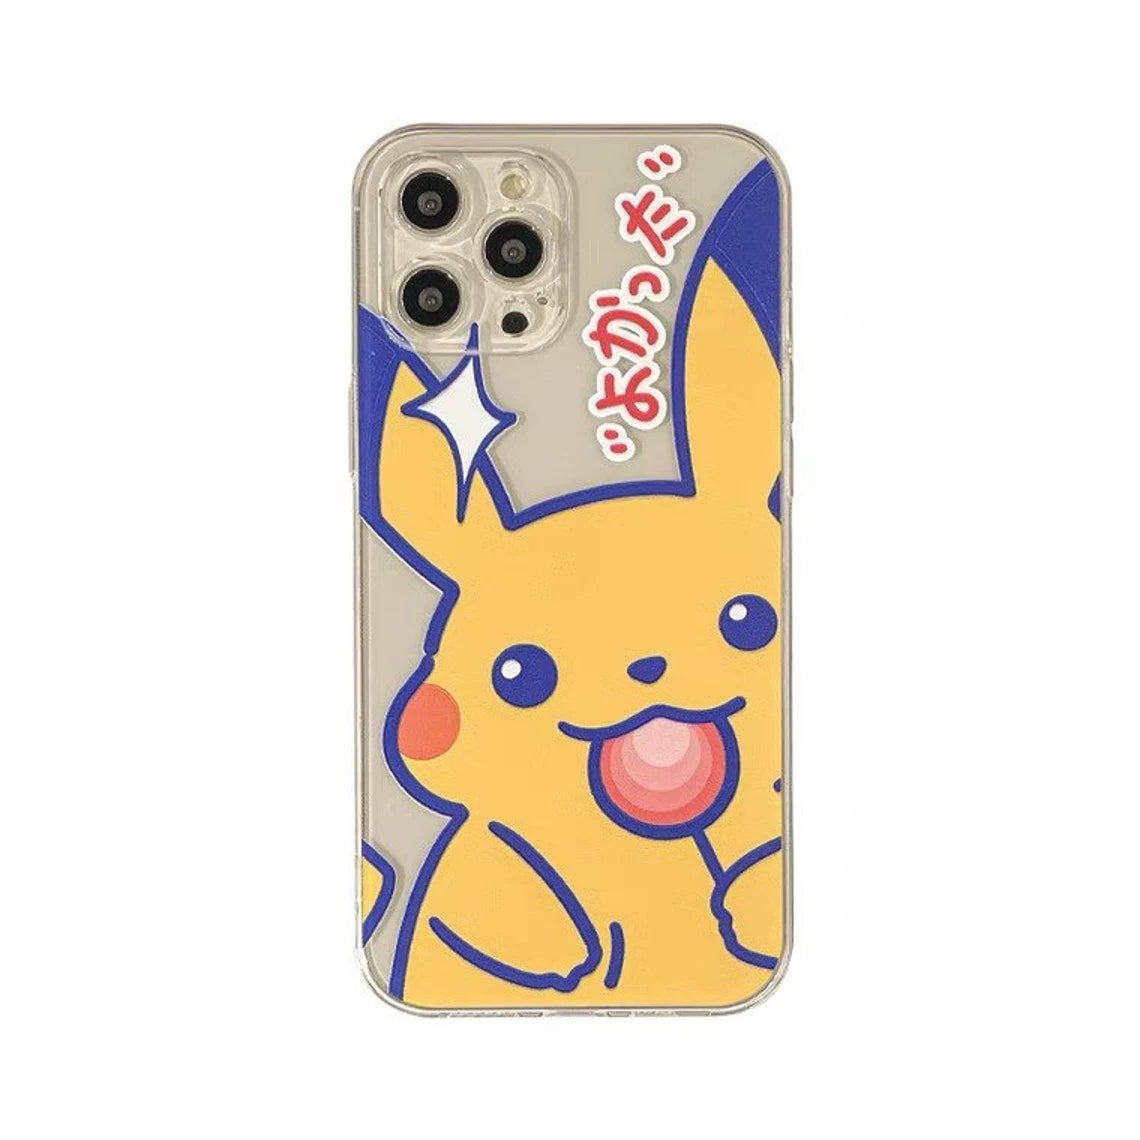 Pokémon Pikachu Lolipop iPhone Case 6 7 8 PLUS SE2 XS XR X 11 12 13 14 15 Pro Promax 12mini 13mini